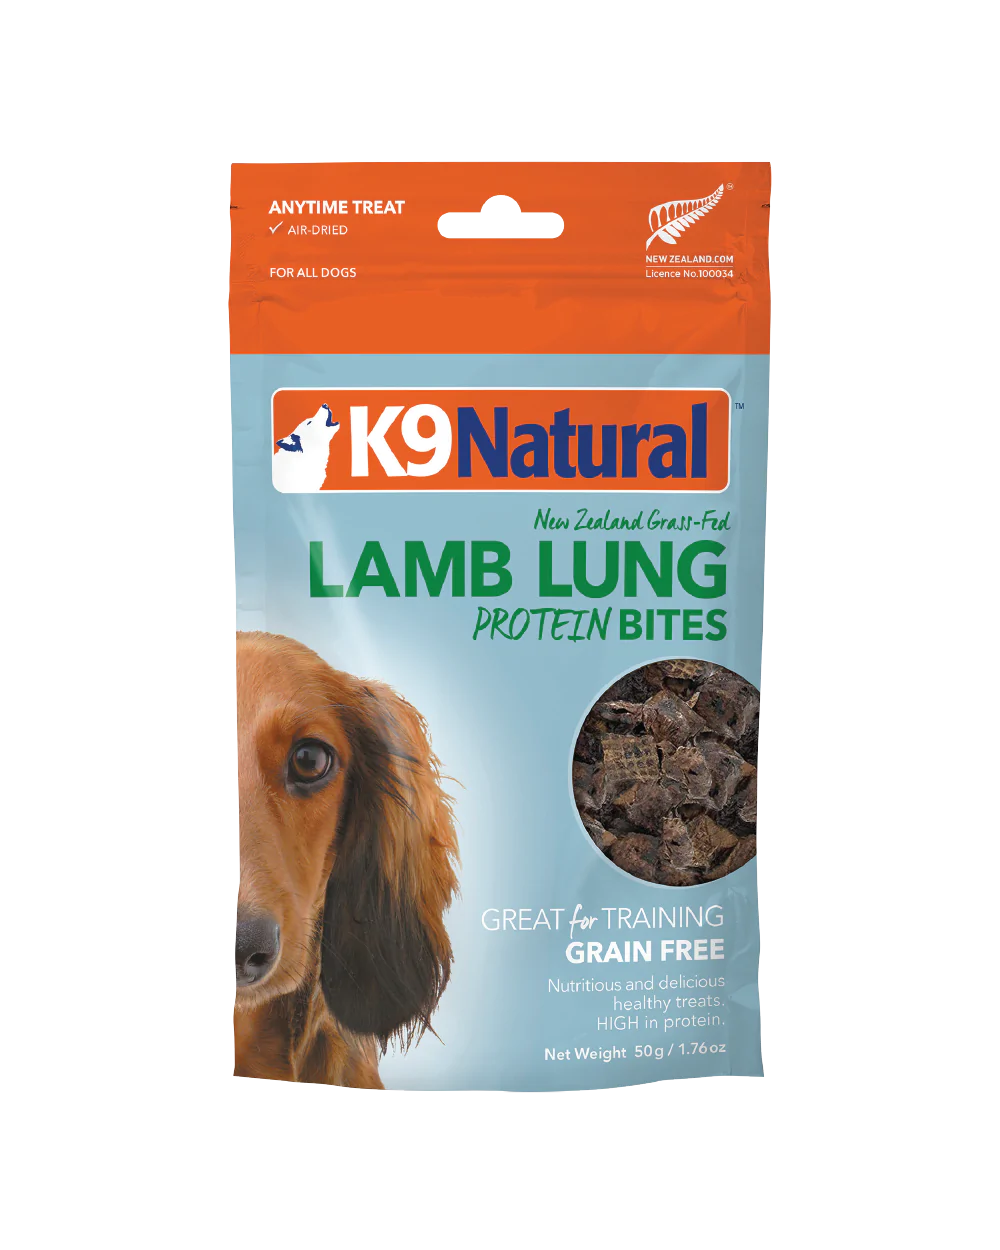 K9 Natural Lamb Lung Protein Bites 1.76-oz, Dog Treats